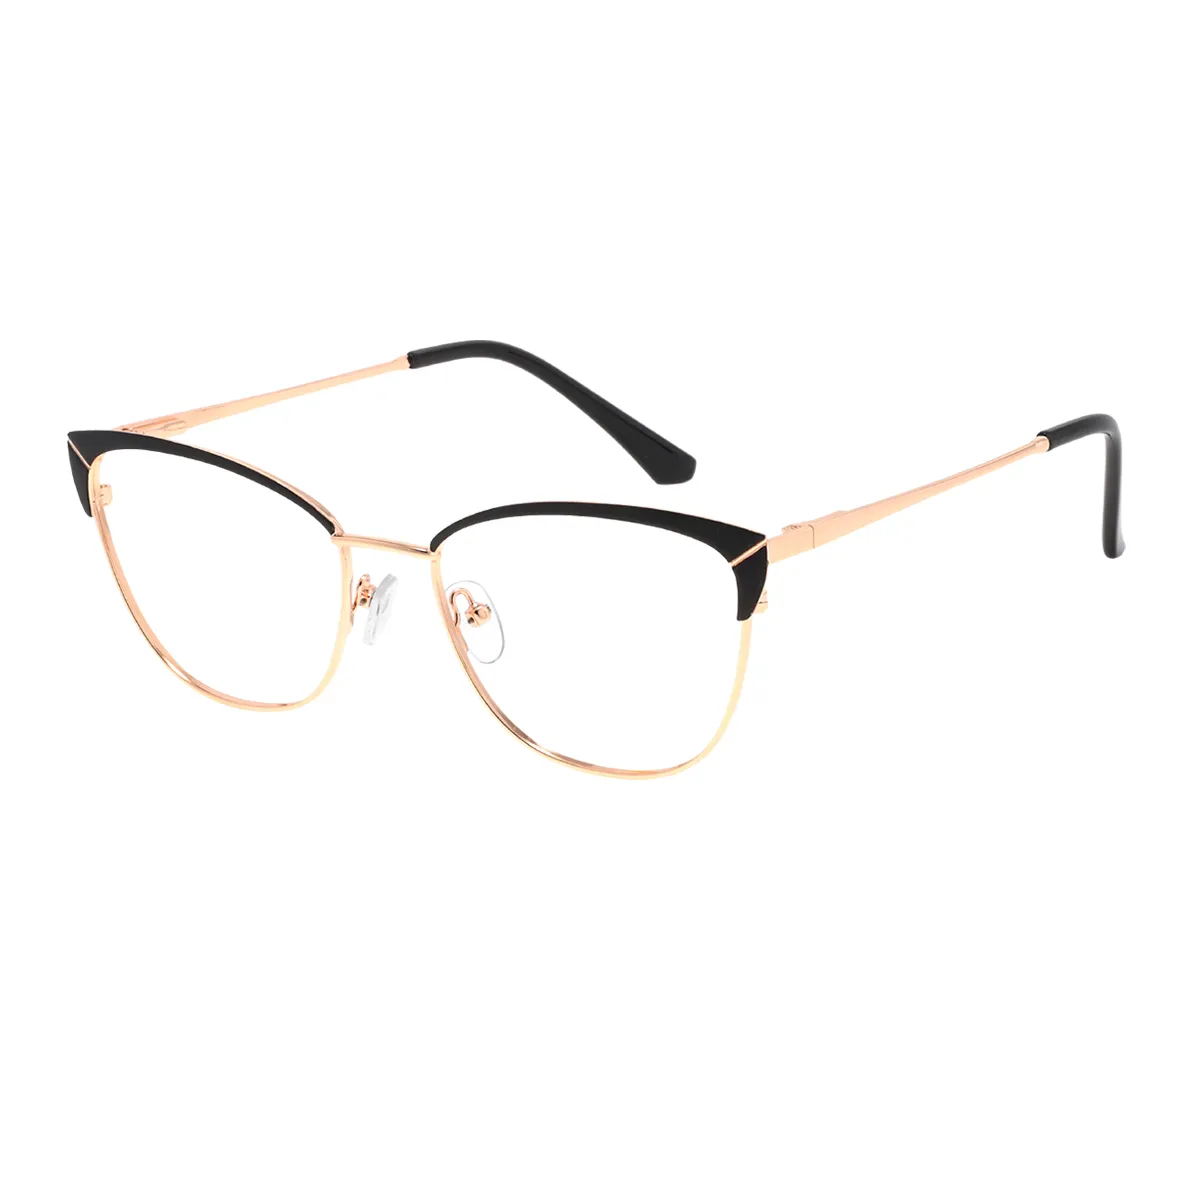 Laurinda - Browline Black-gold Glasses for Women - EFE